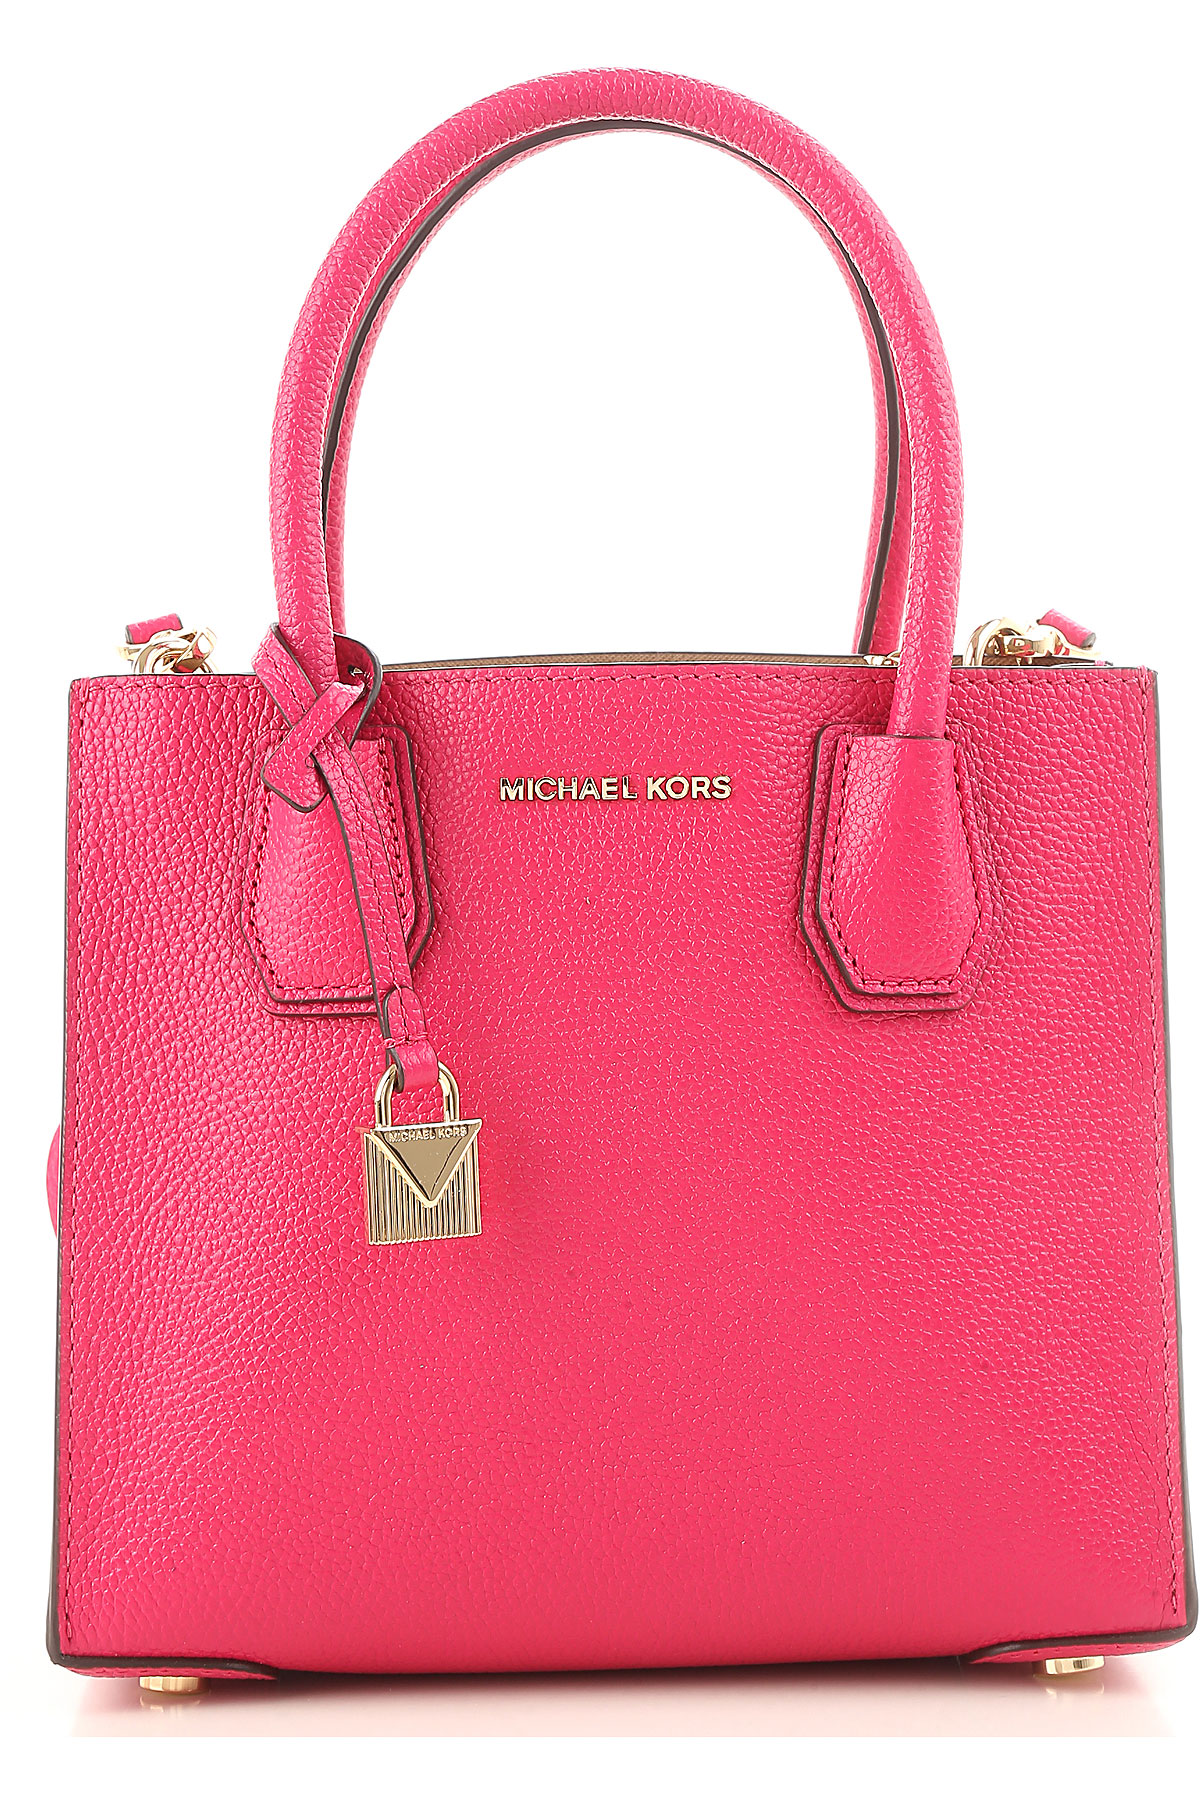 Handbags Michael Kors, Style code: 30f6gm9m2l-564-